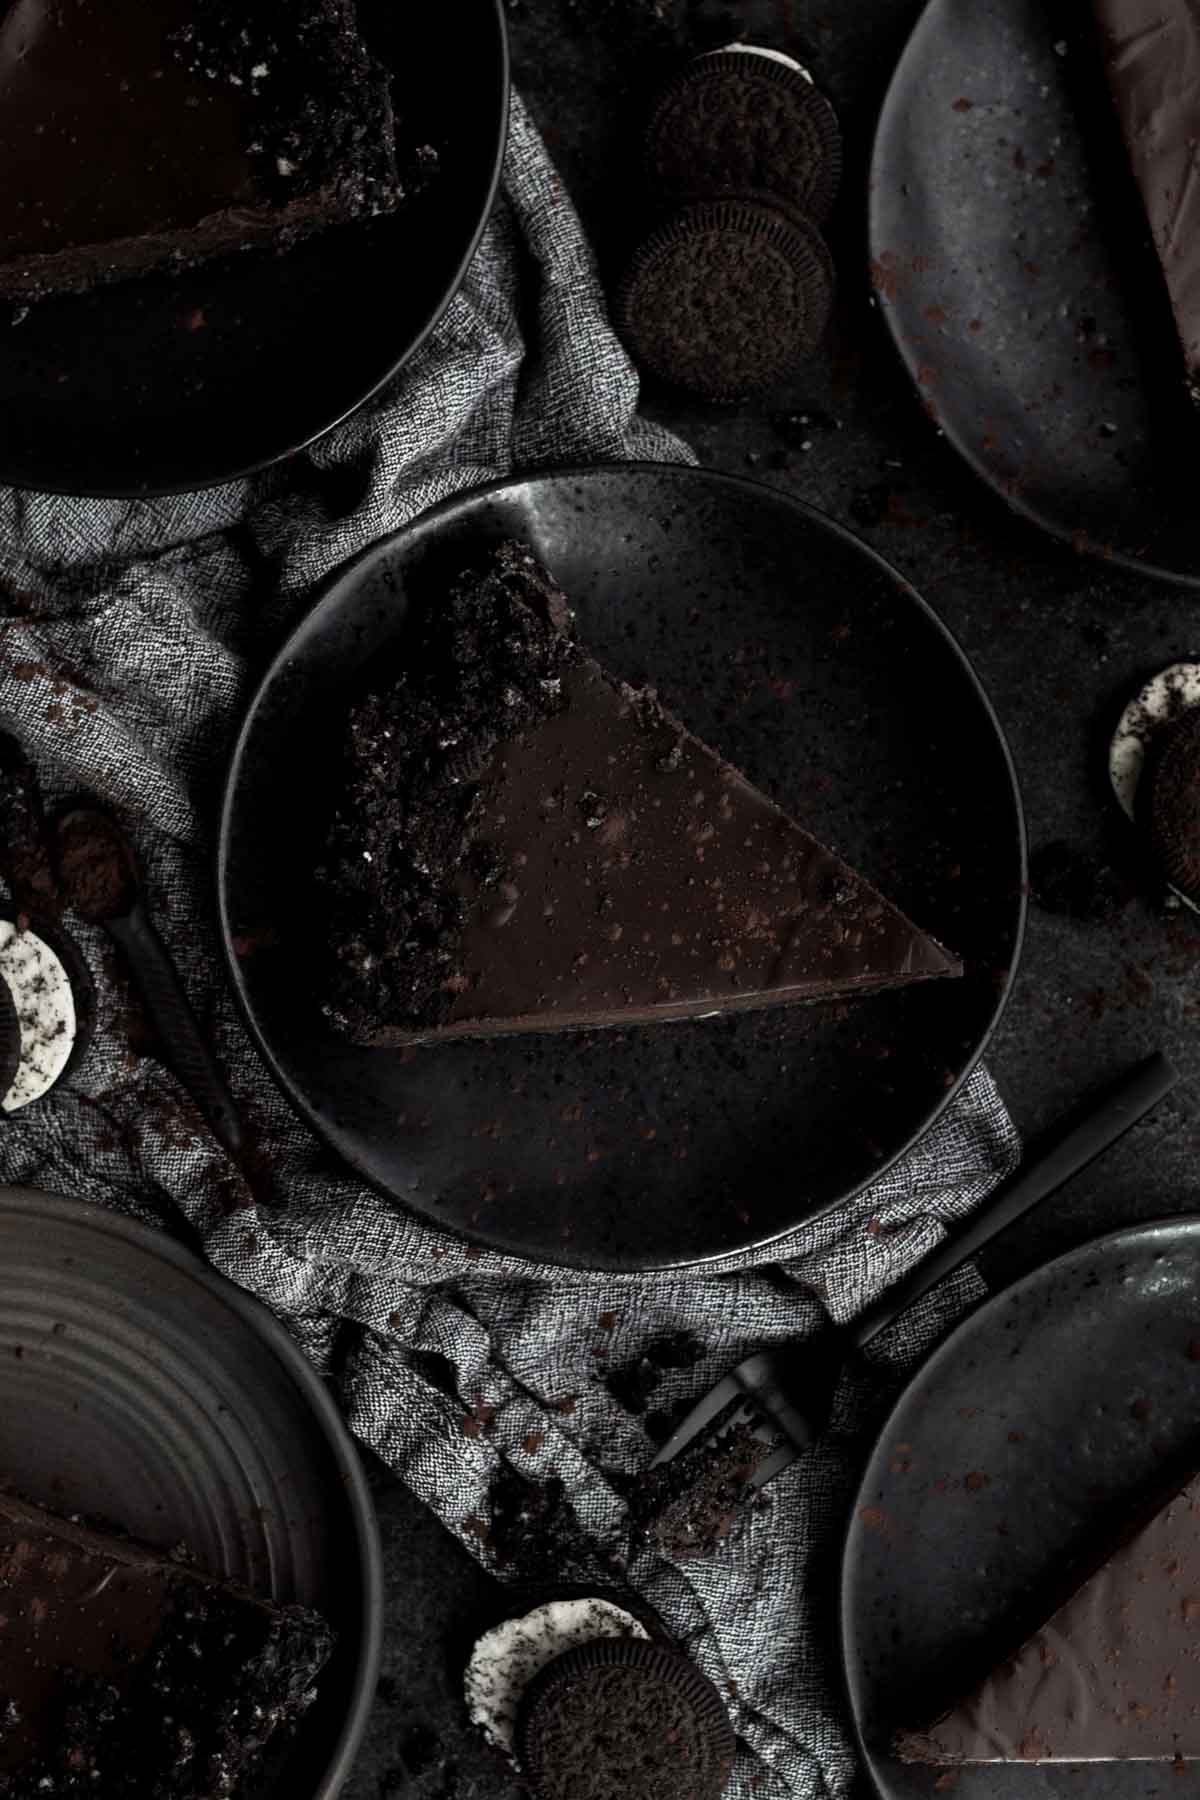 A slice of chocolatey tart on a black plate.